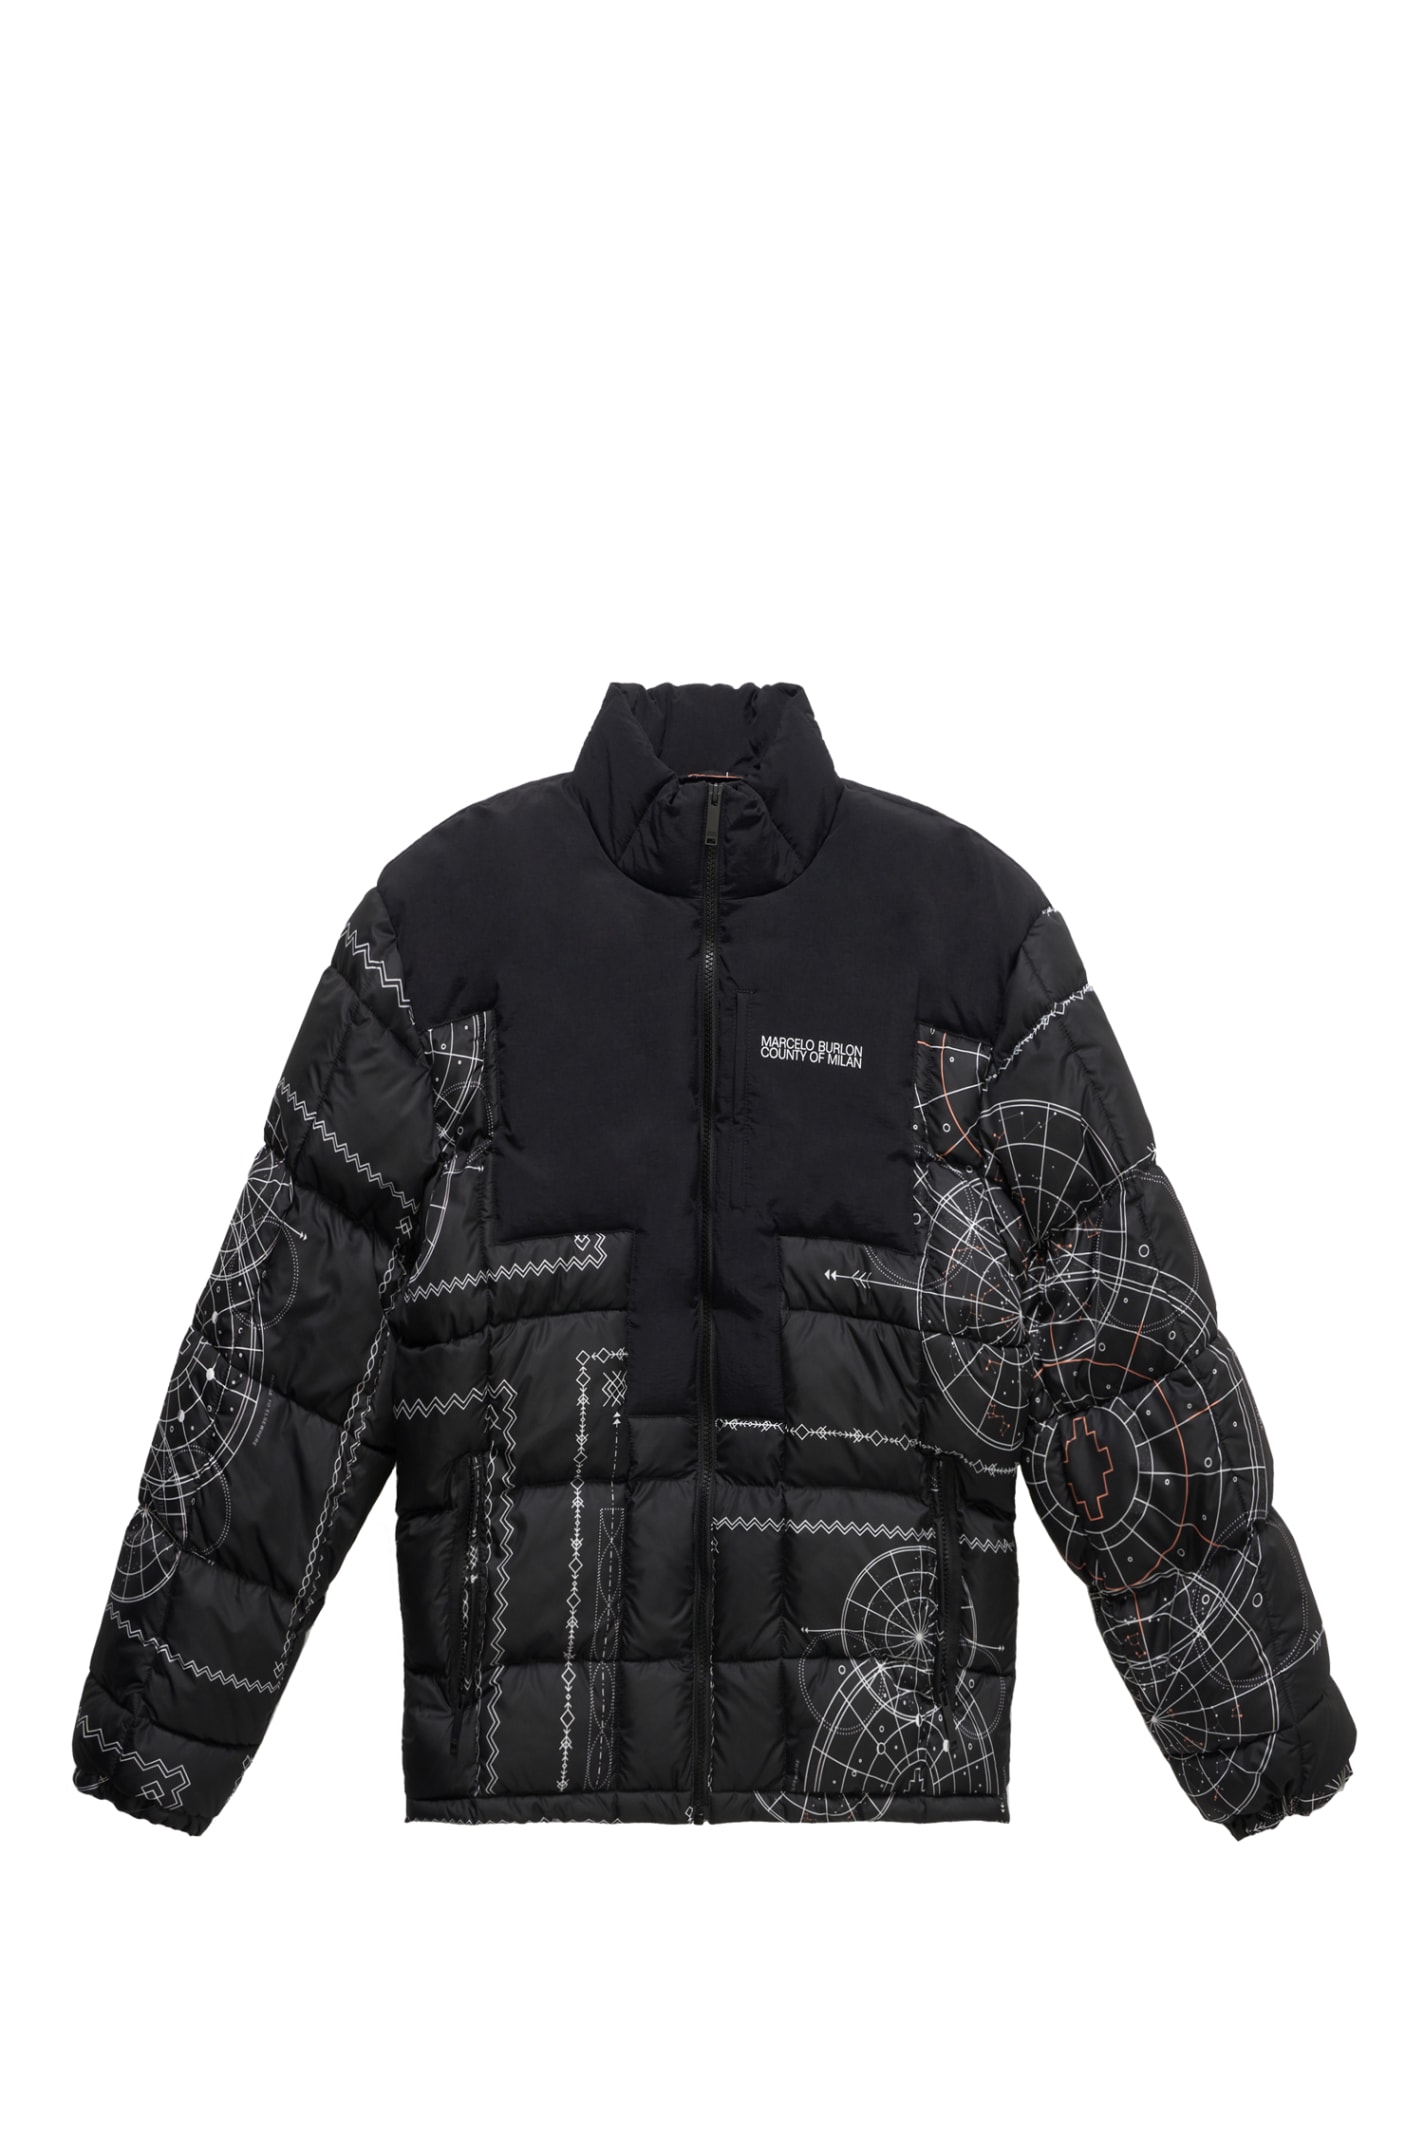 Marcelo Burlon Black astral Puffer Jacket